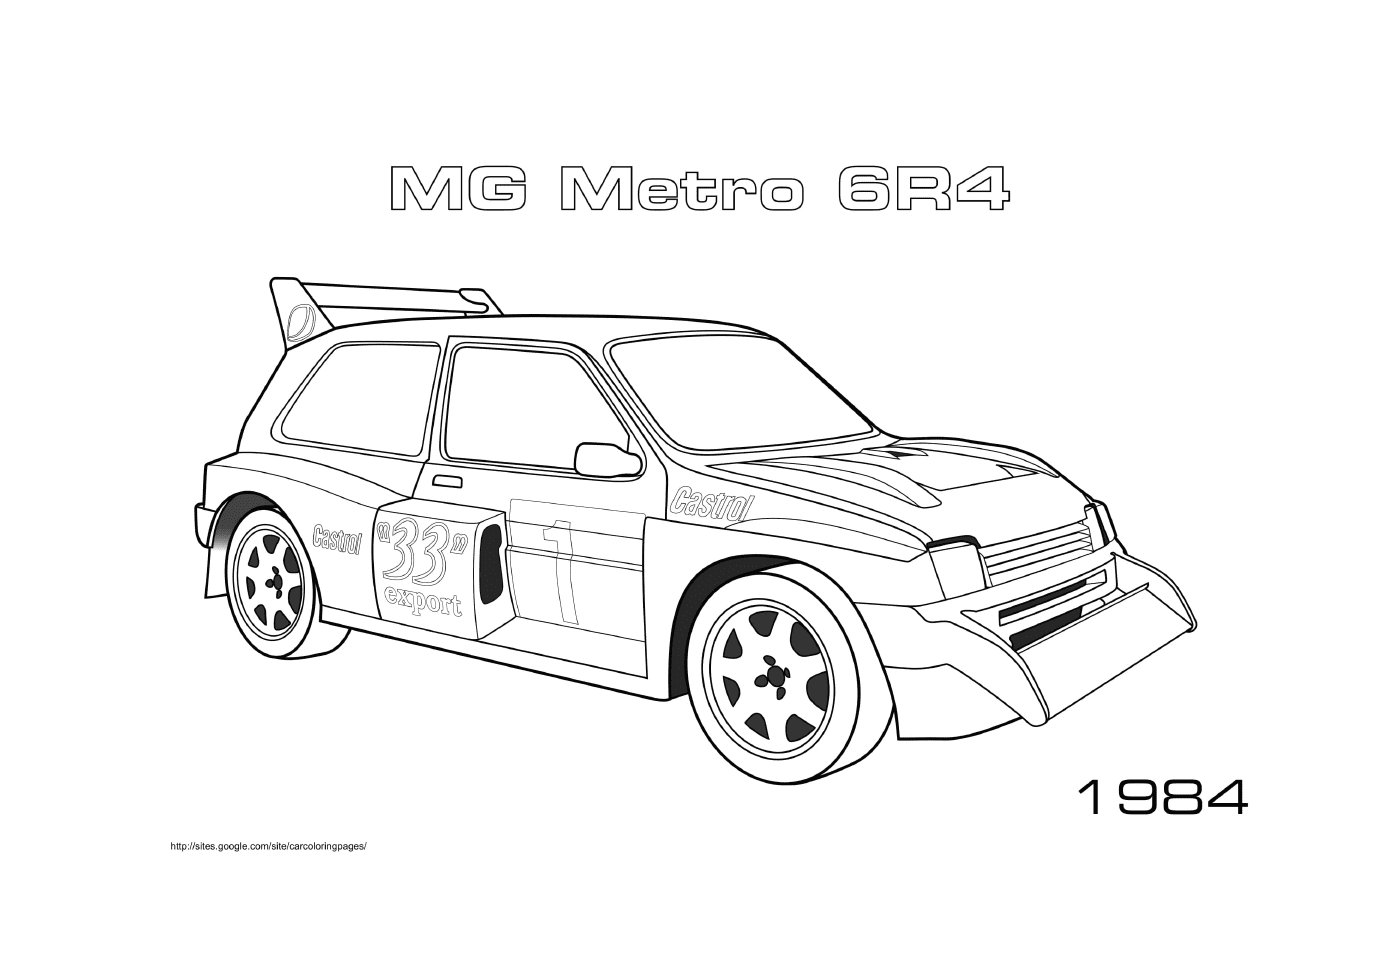   MG Metro 6r4 de 1984 